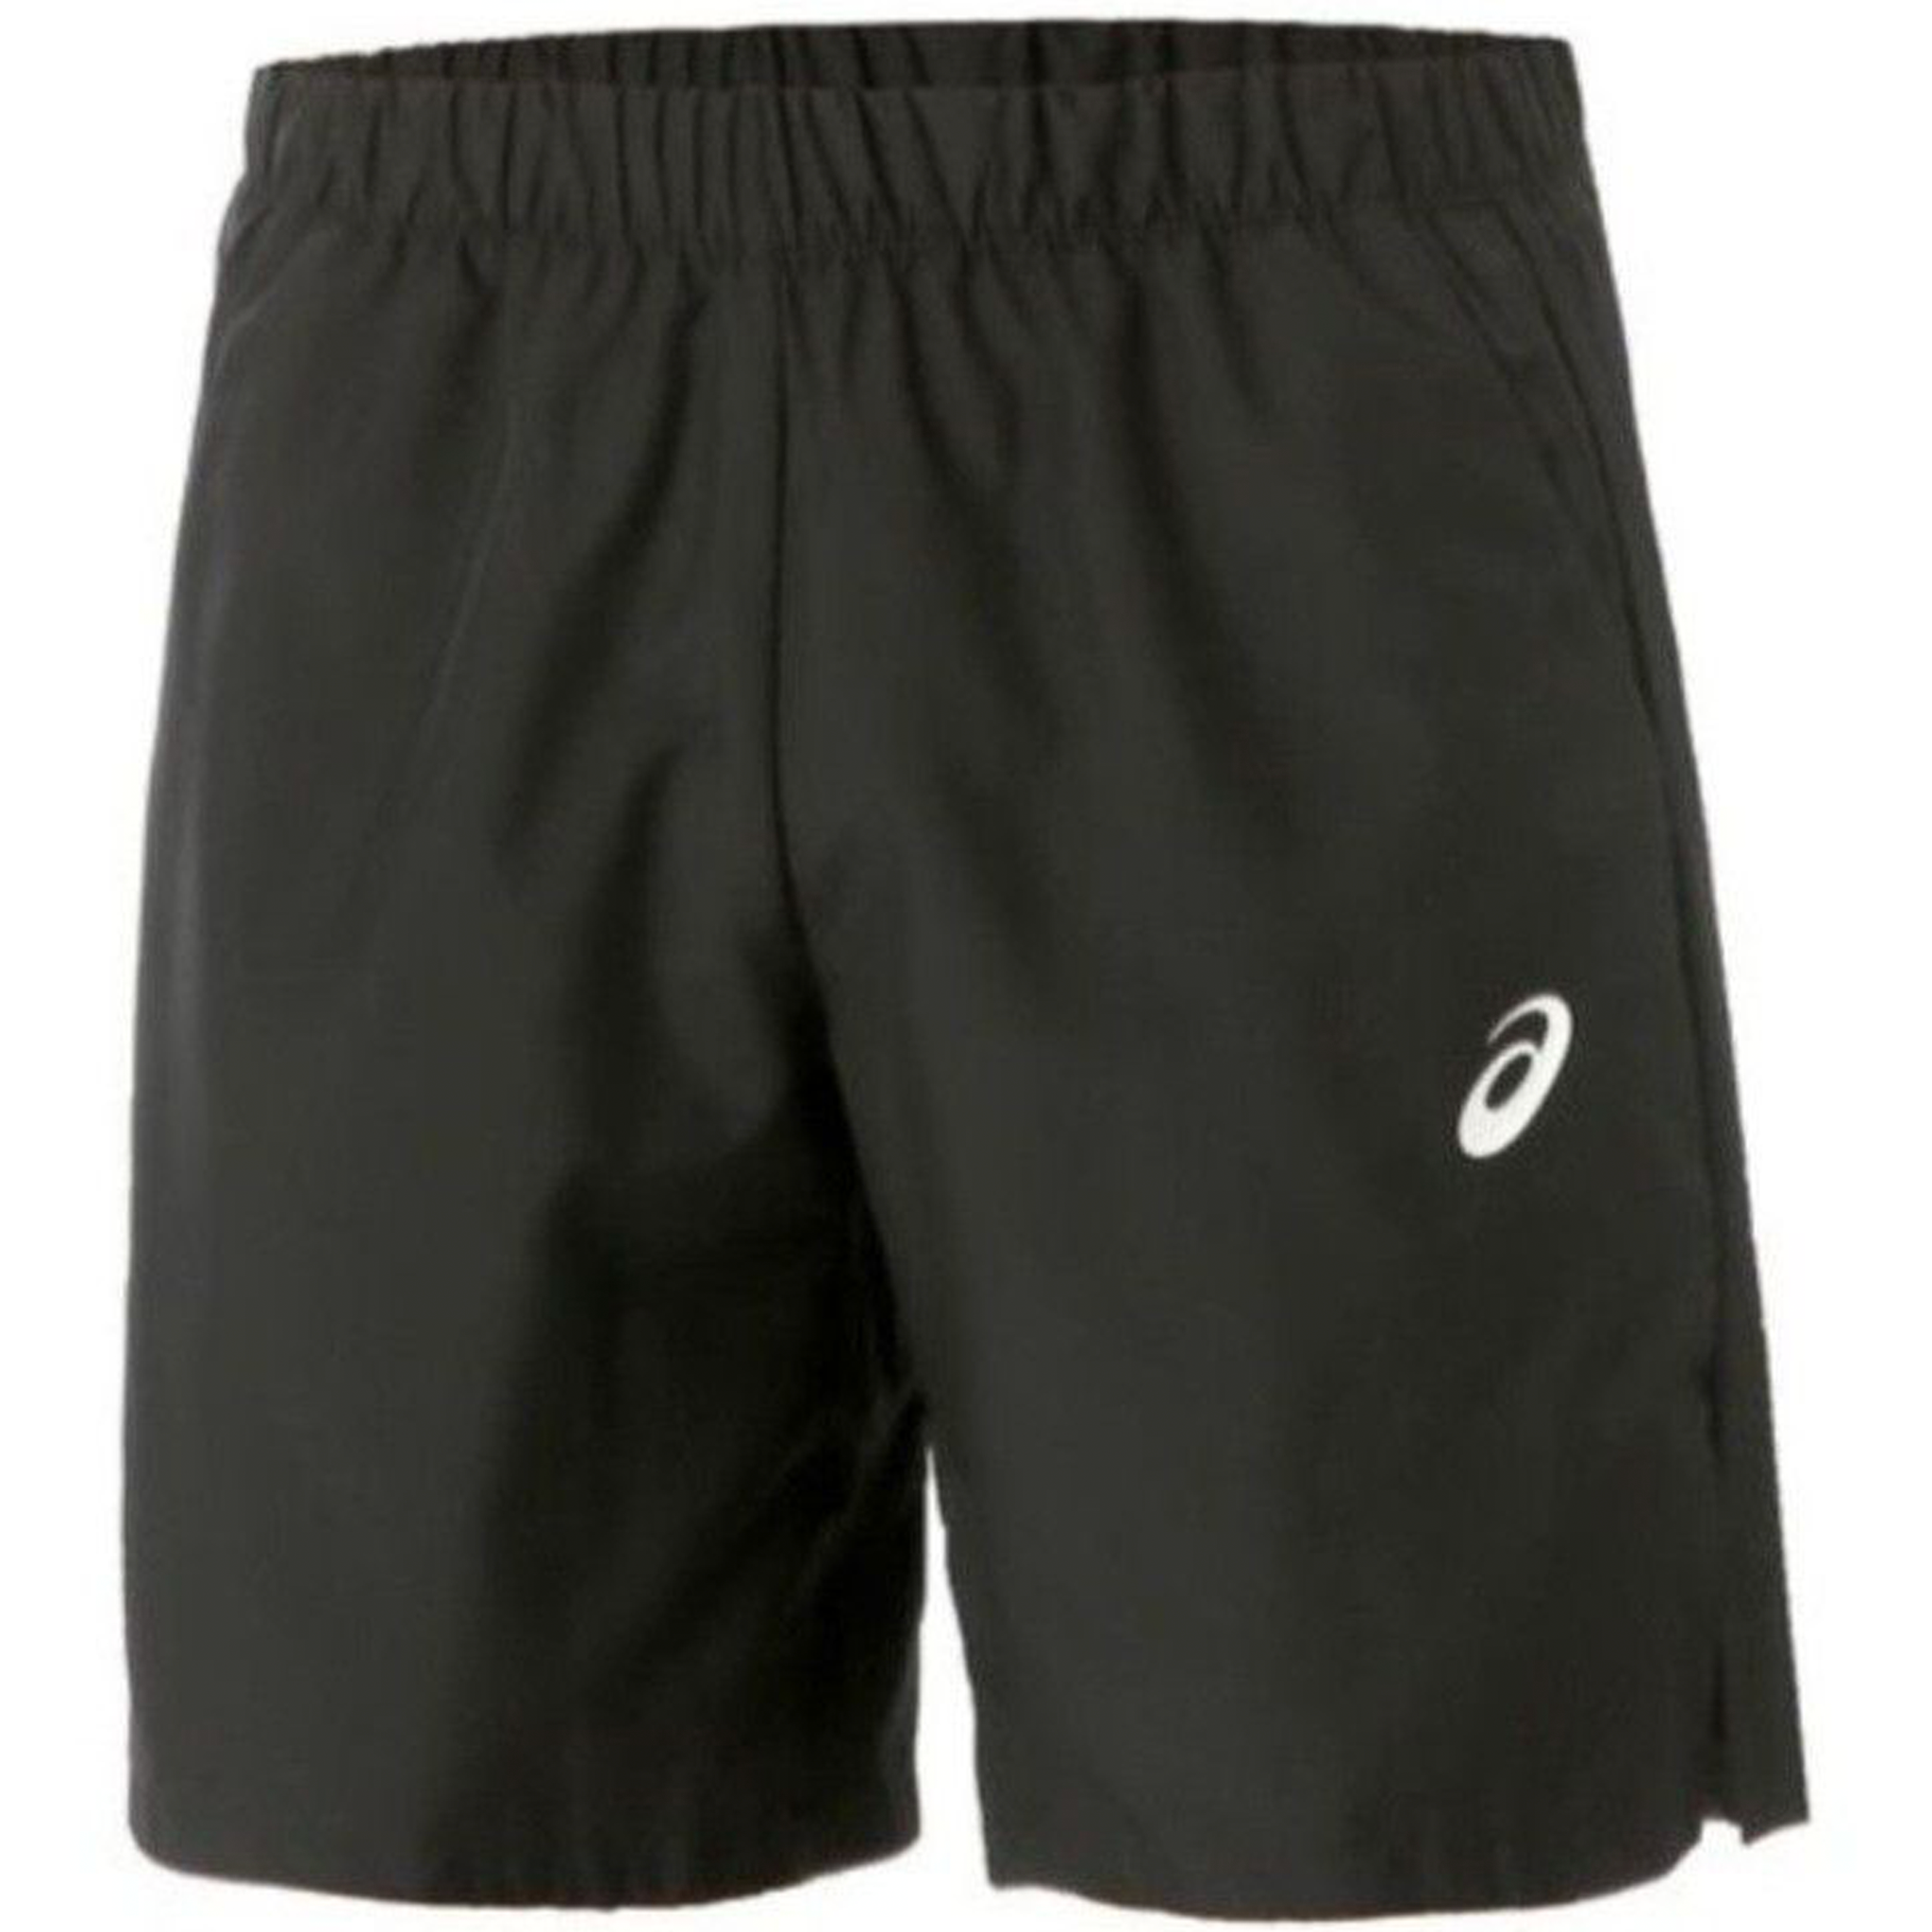 Asics court 9in shorts - performance black